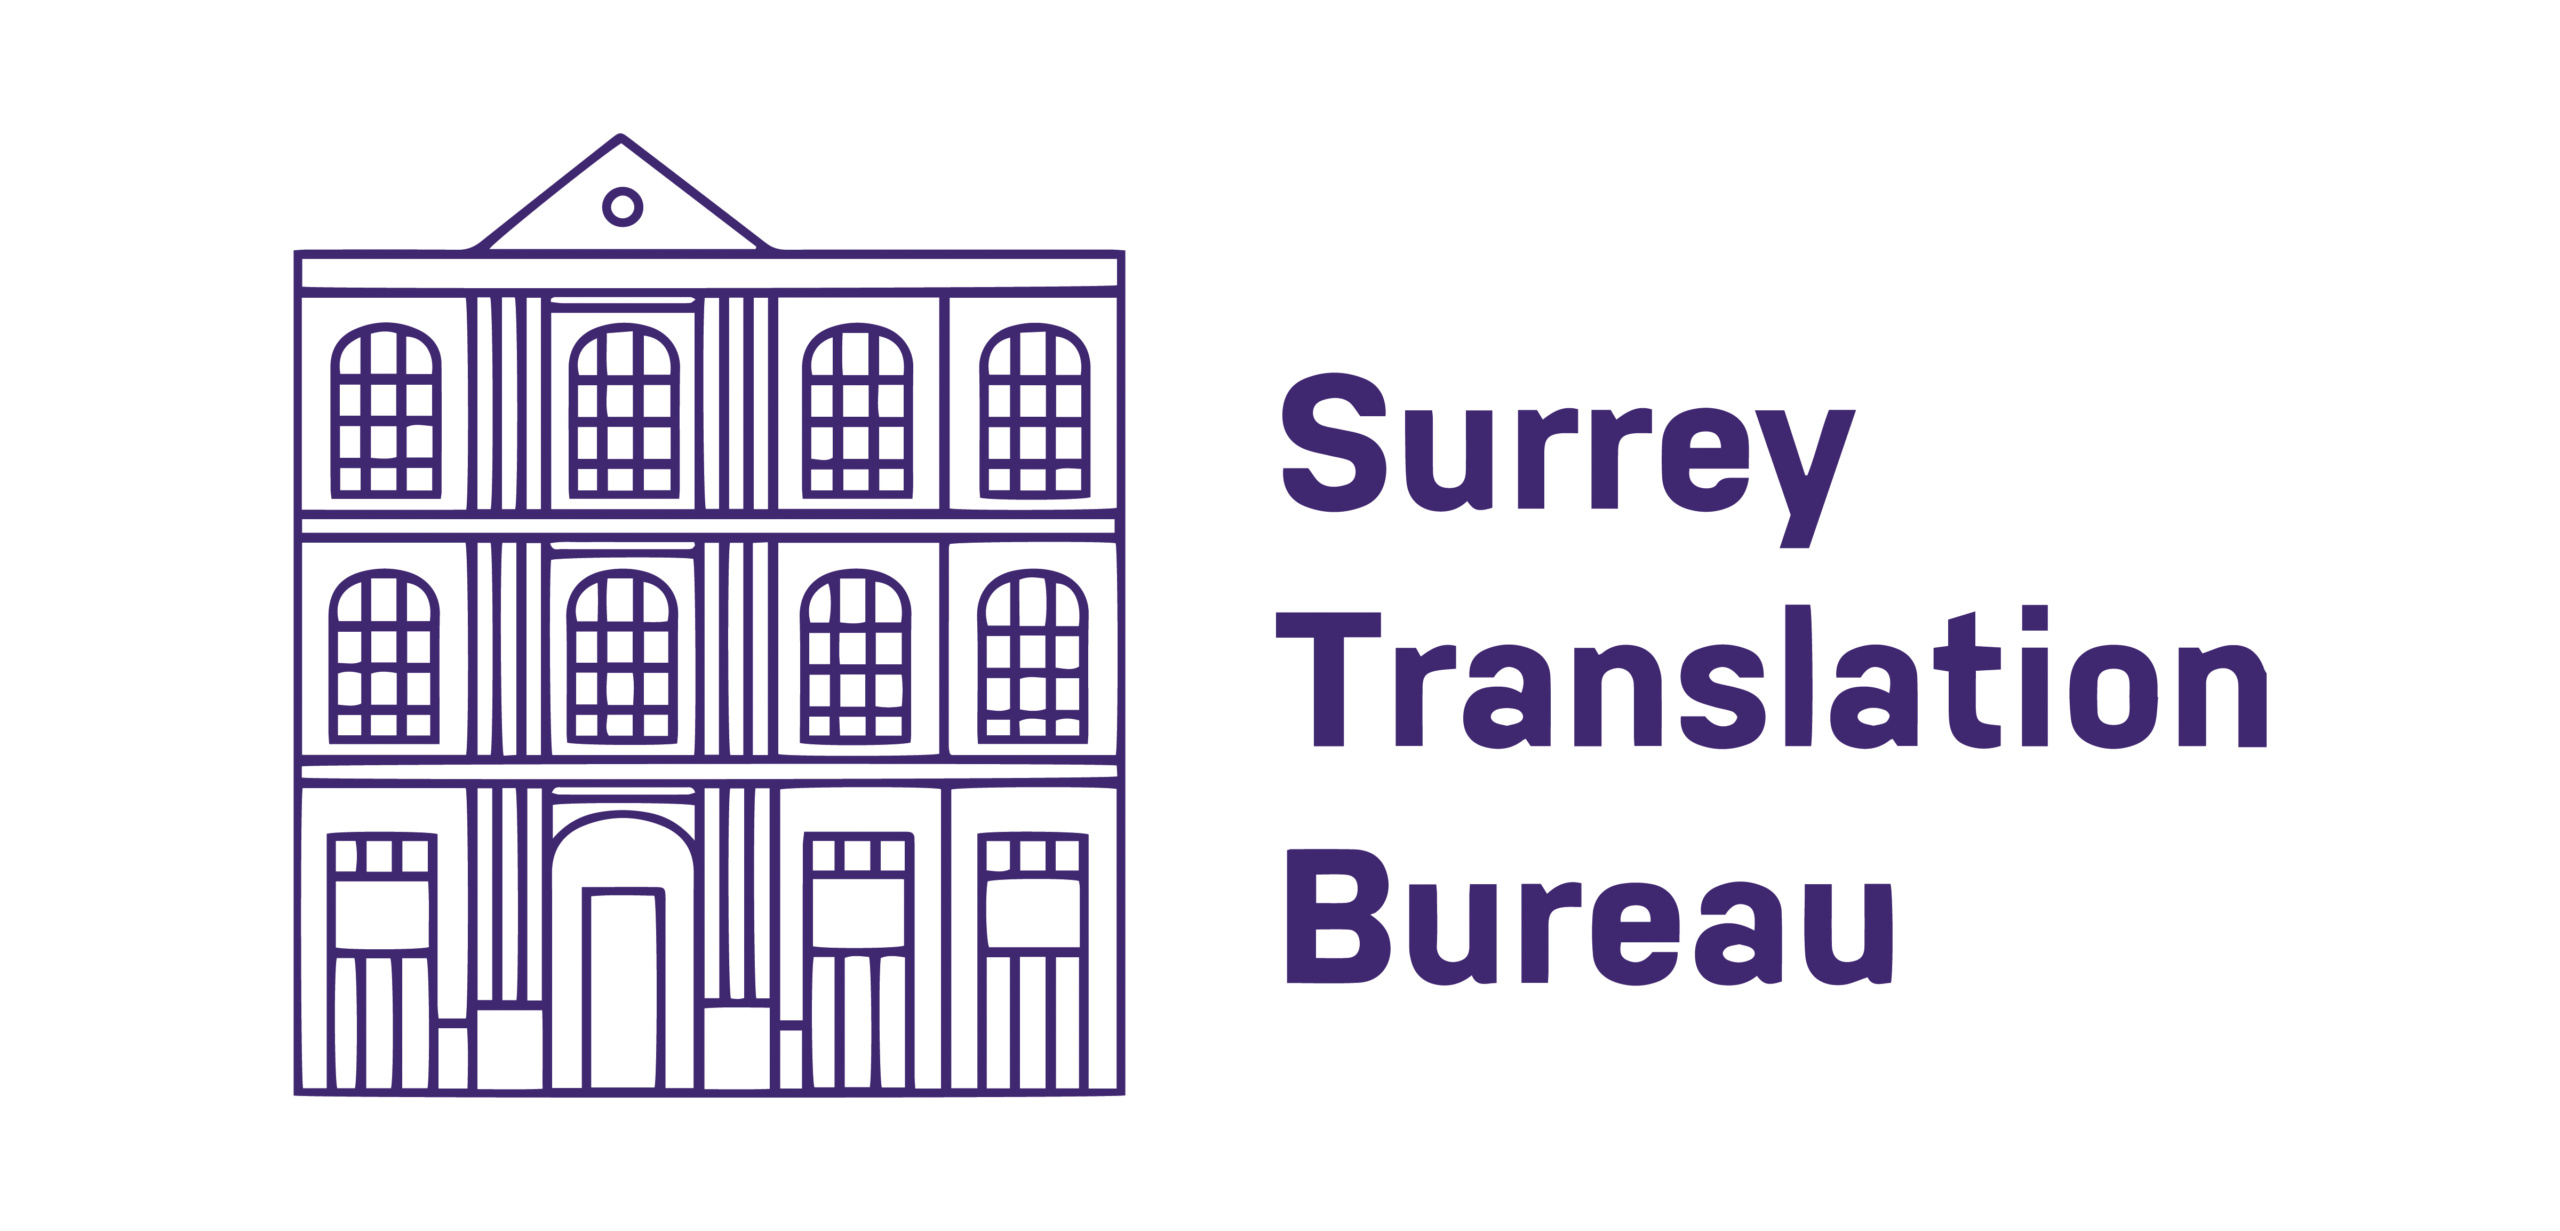 Surrey Translation Bureau